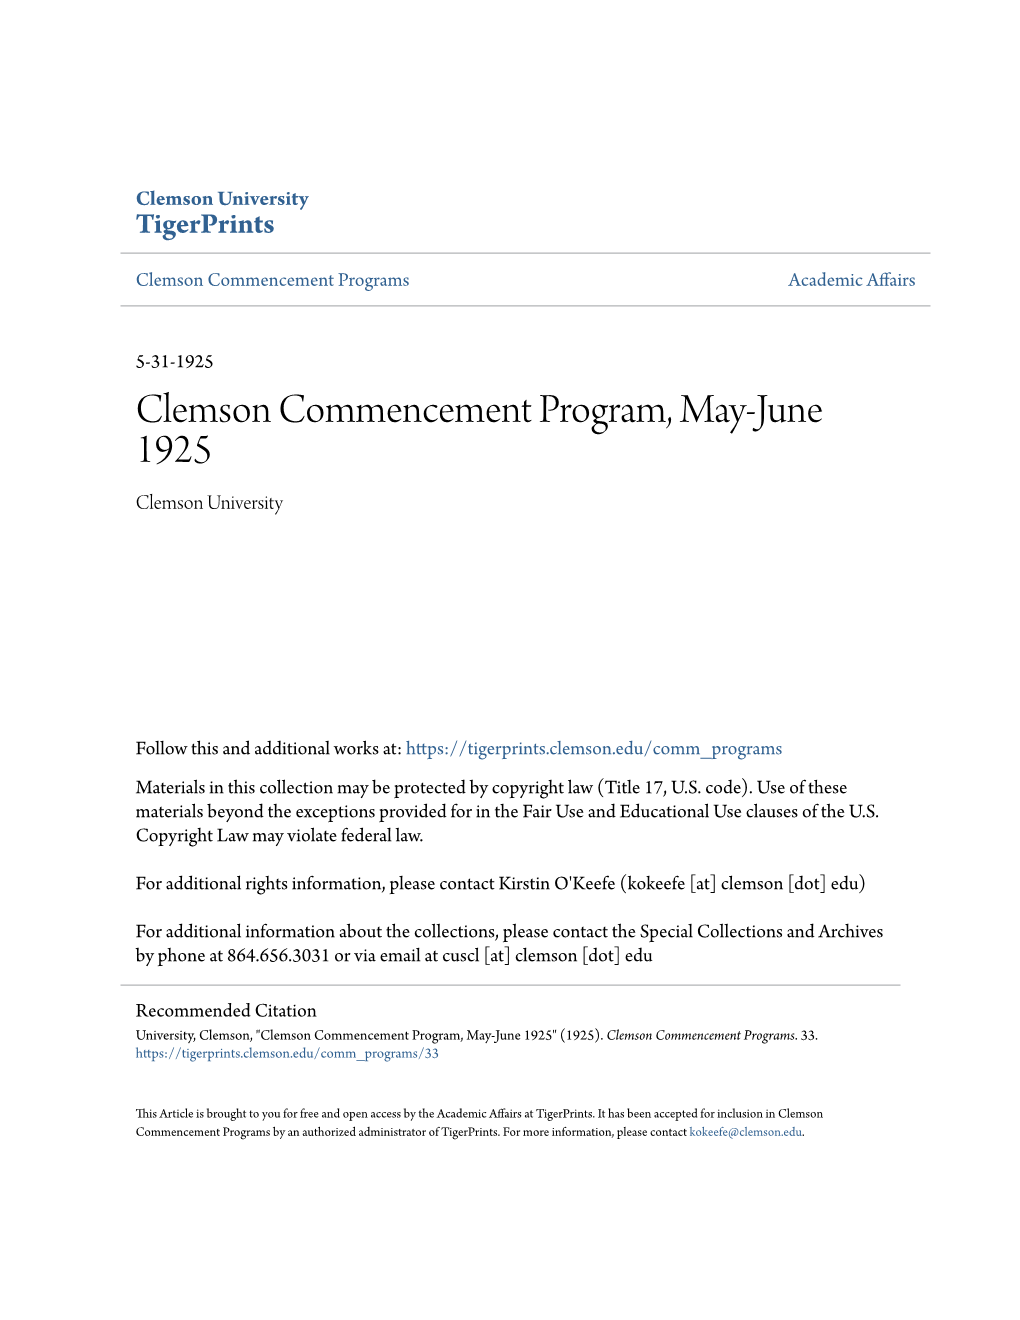 Clemson Commencement Program, May-June 1925 Clemson University